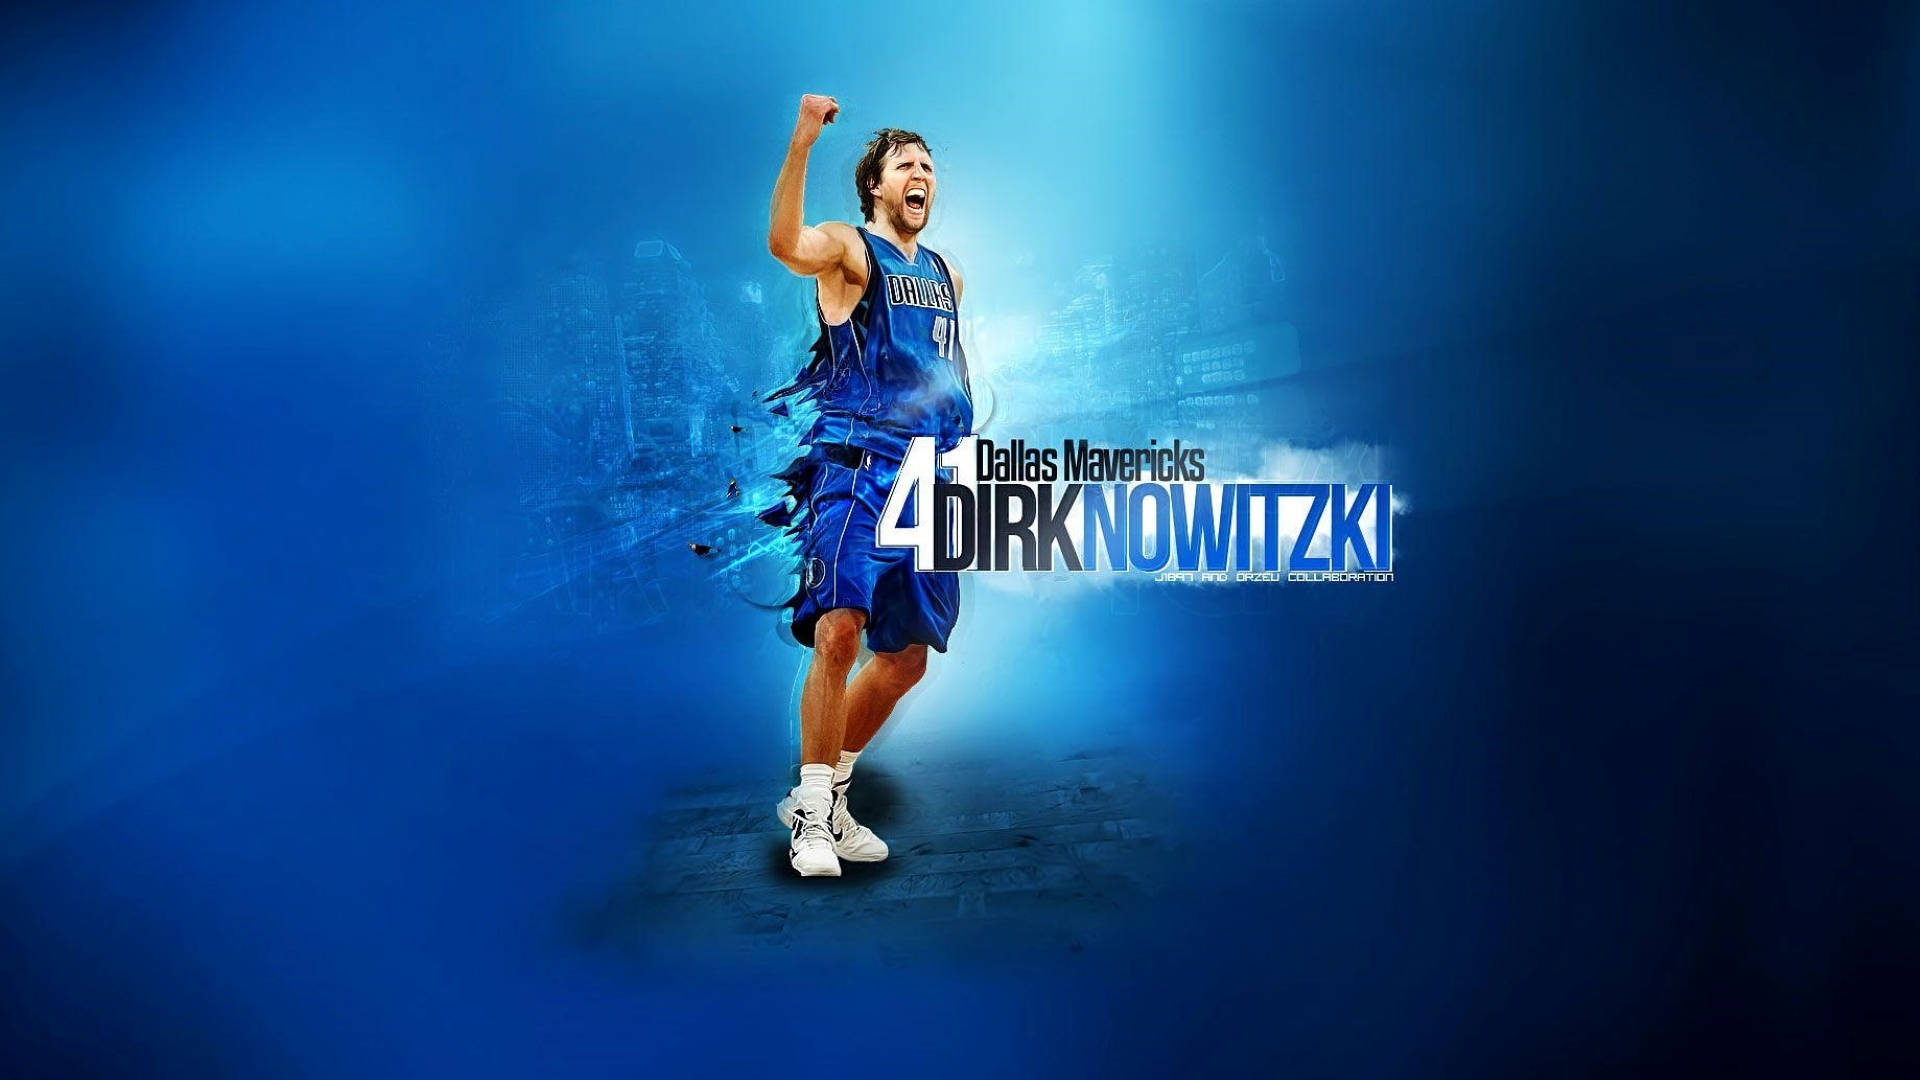 Dirk Nowitzki Player Number 41 Background